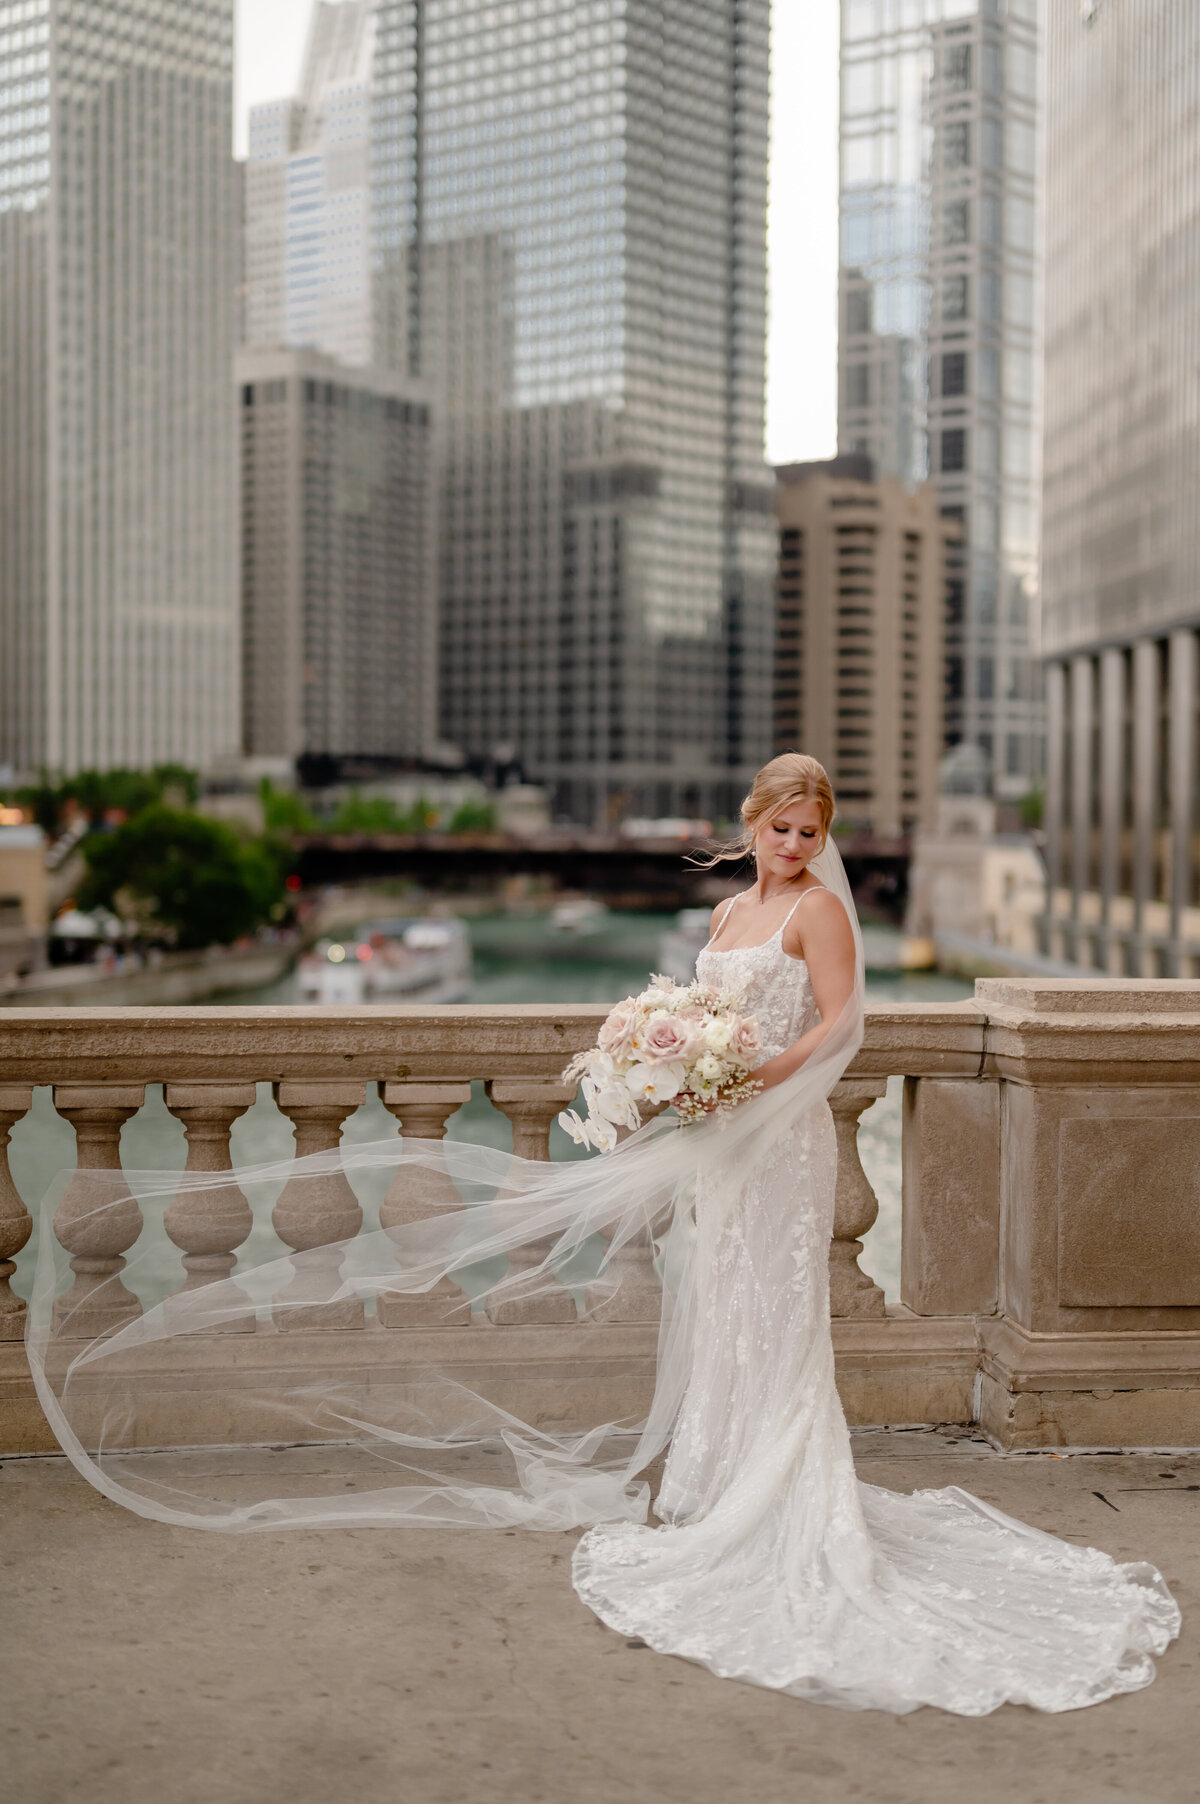 Brides veil blows in the wind Chicago, IL